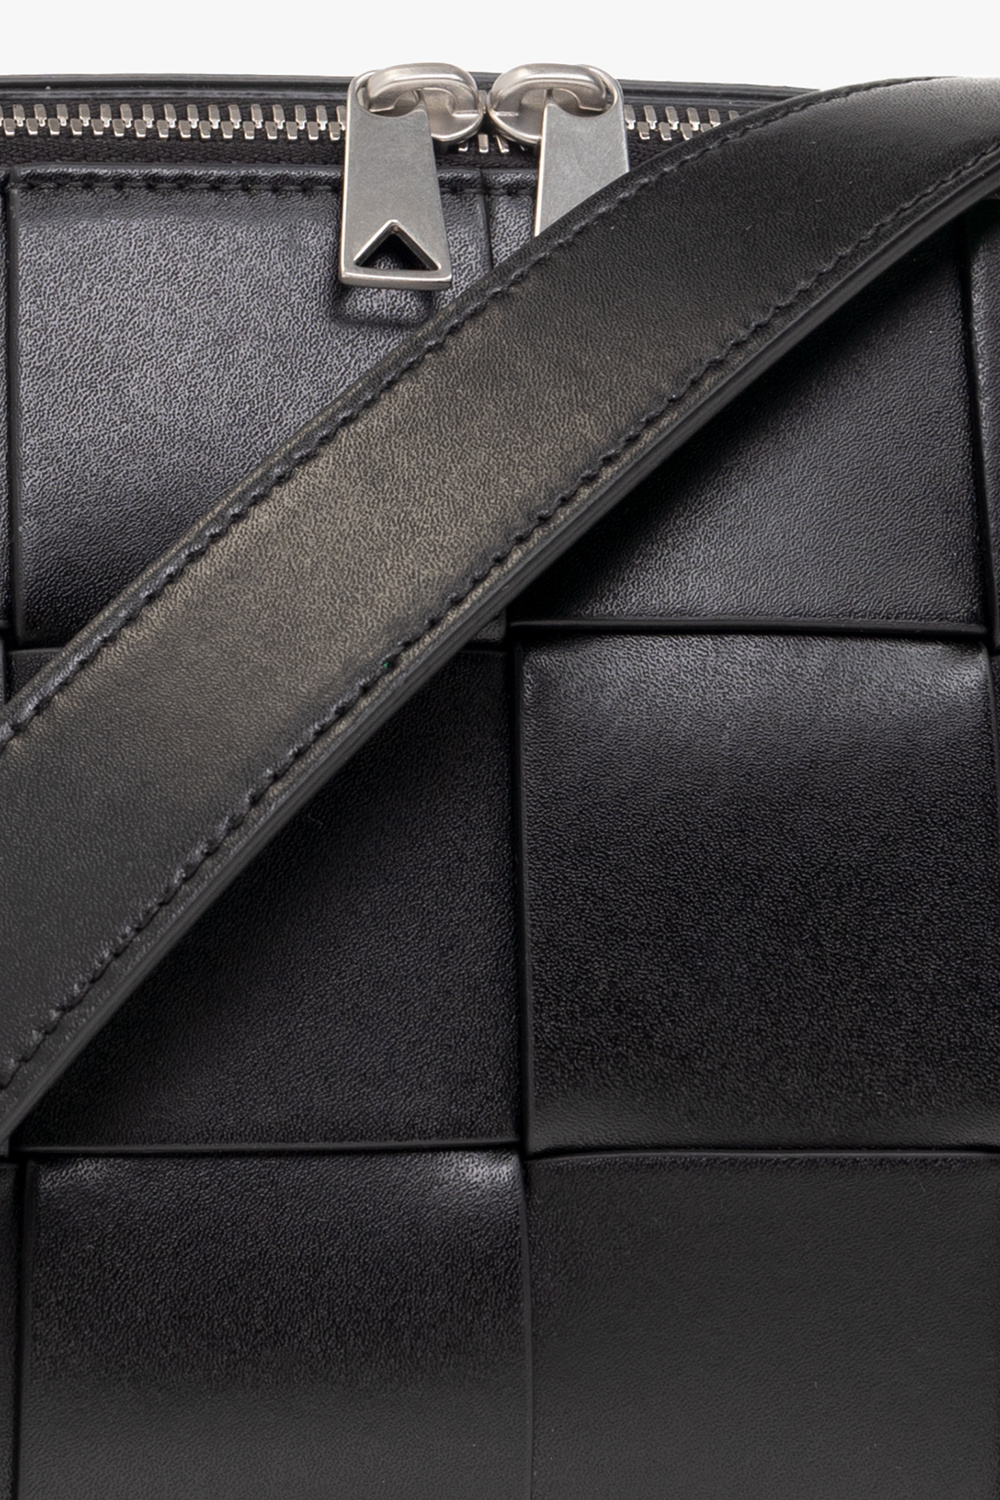 bottega collana Veneta ‘Cassette Camera’ shoulder bag